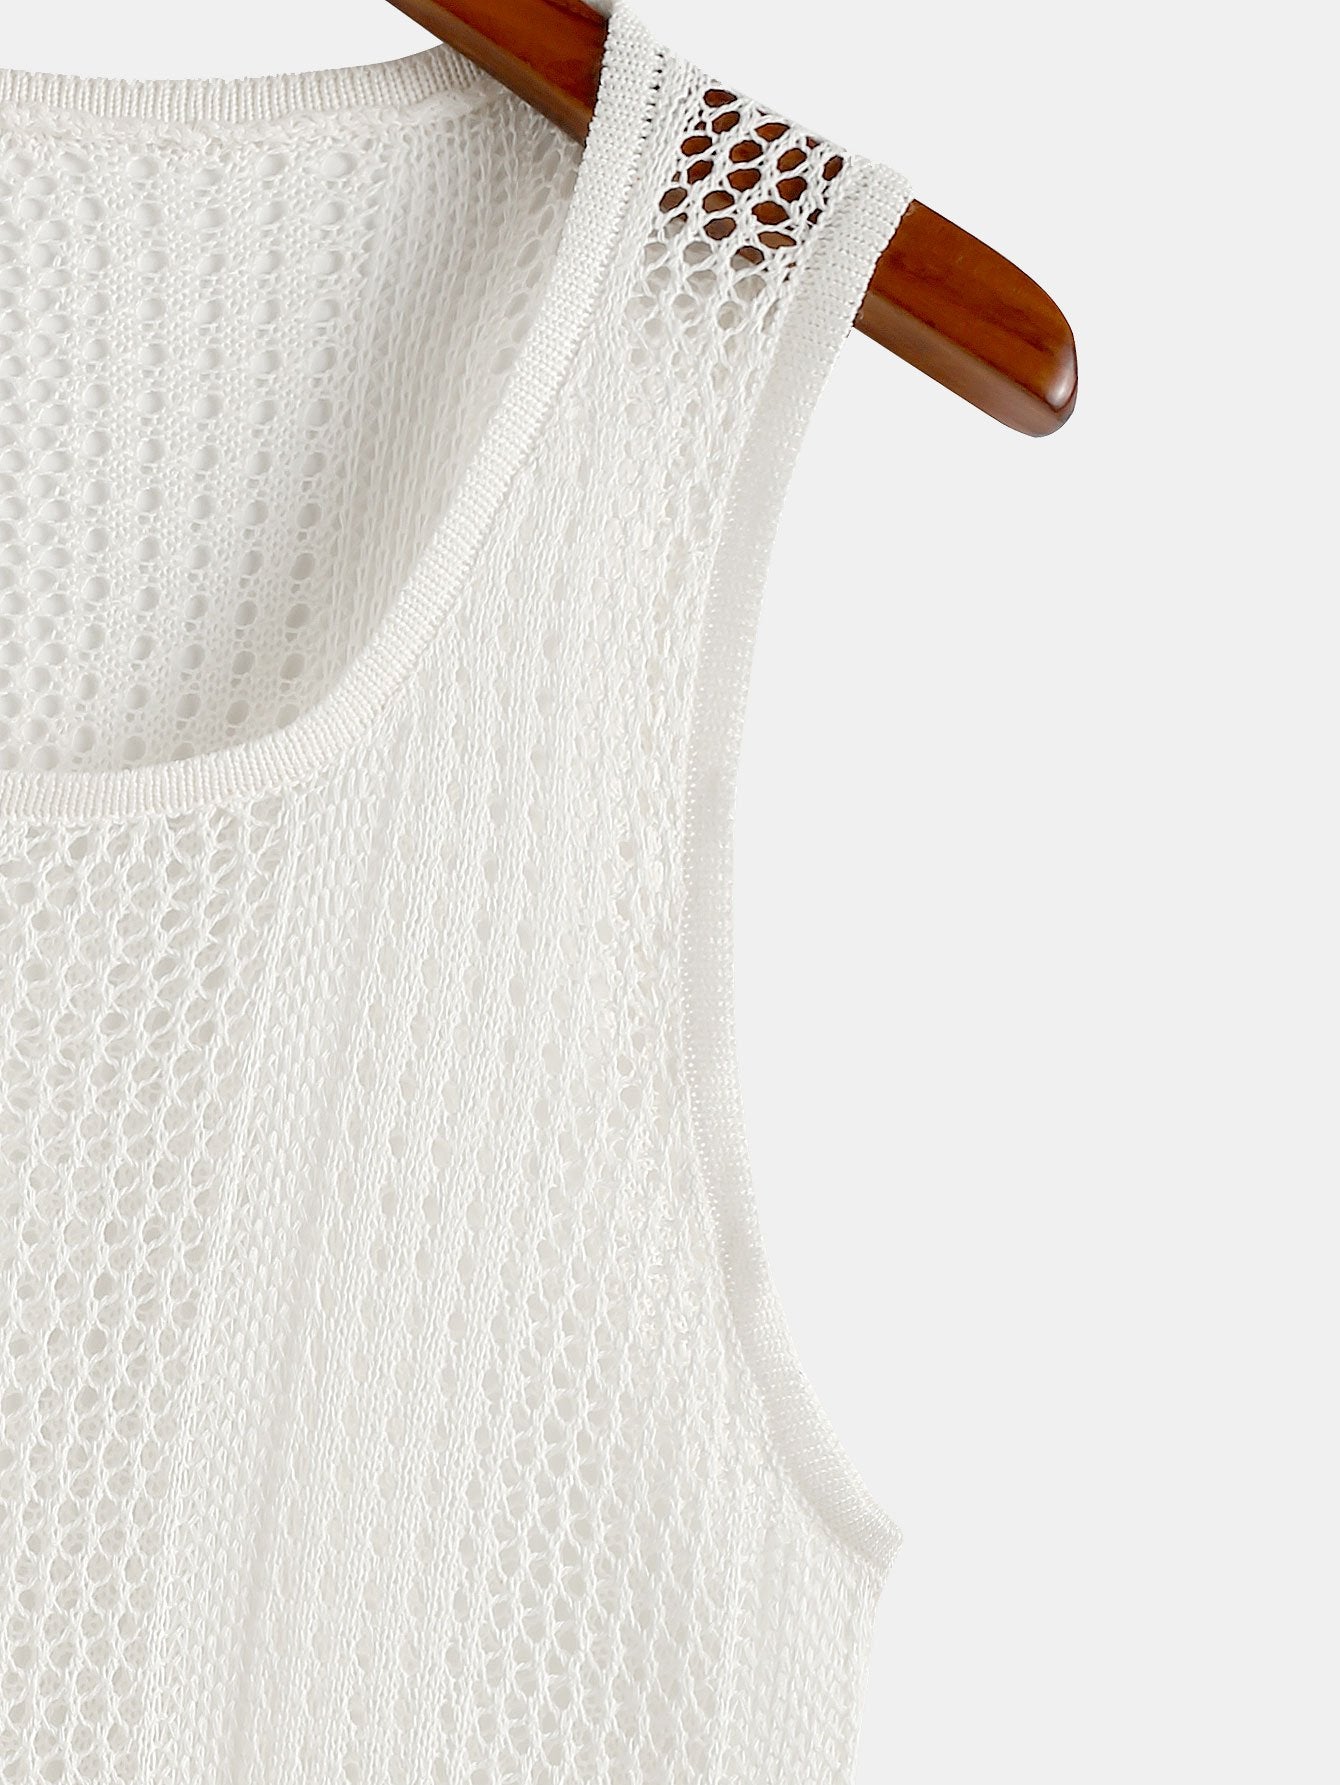 Textured Knit Sweater Tank Top